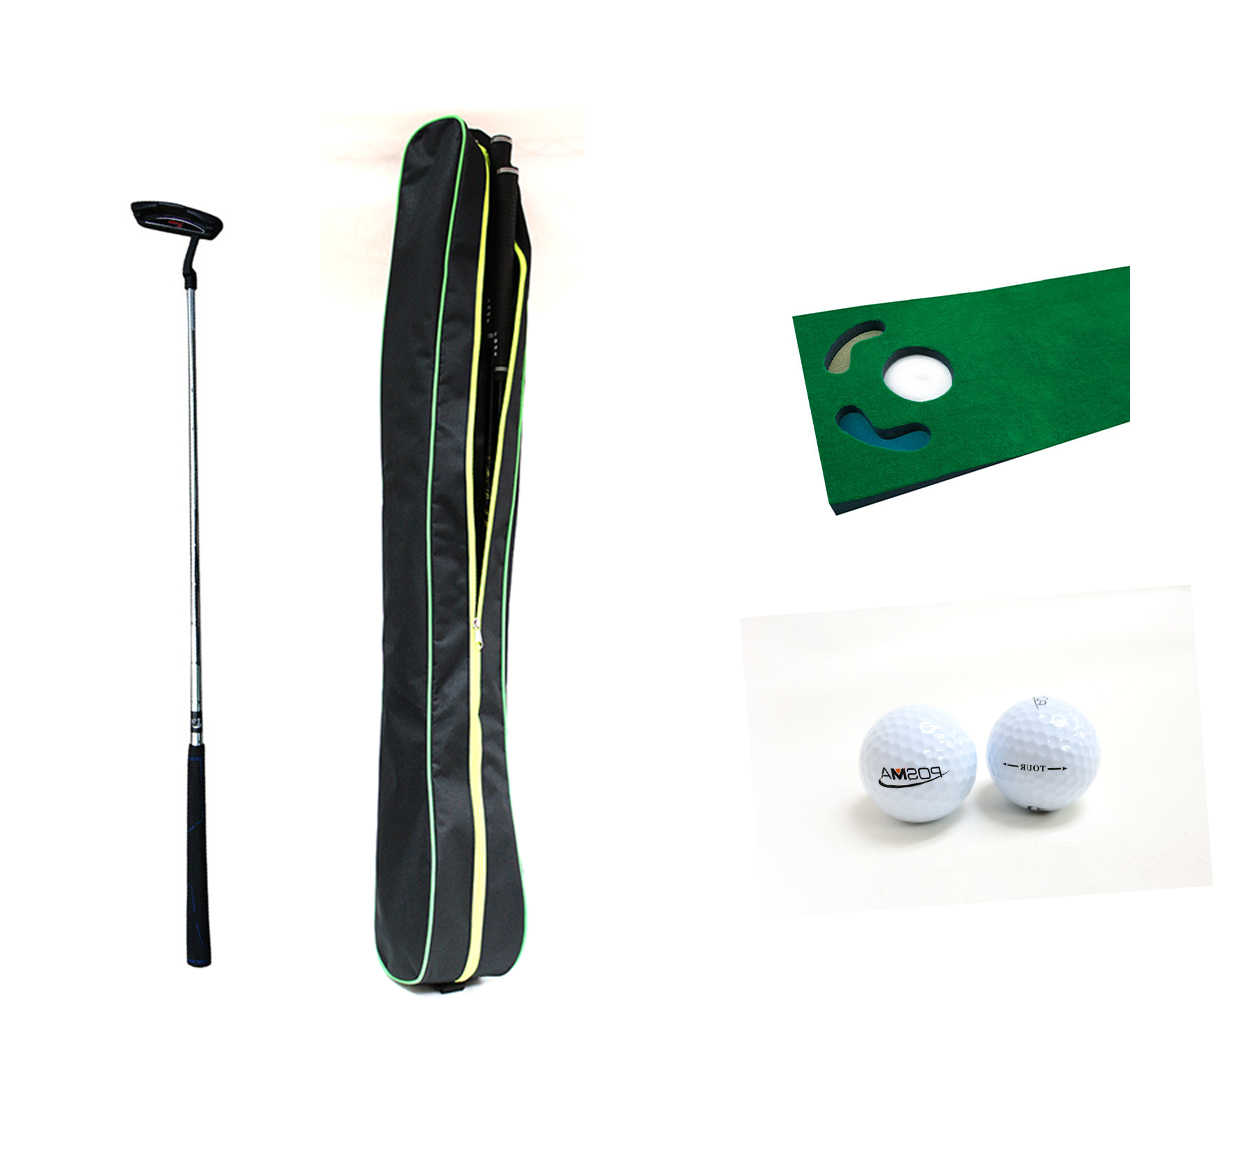 Posma GCP01A高爾夫推桿3合1套裝包括高爾夫推桿和帶坡度推桿地毯各一,雙層比賽球2個,附送輕便球桿包